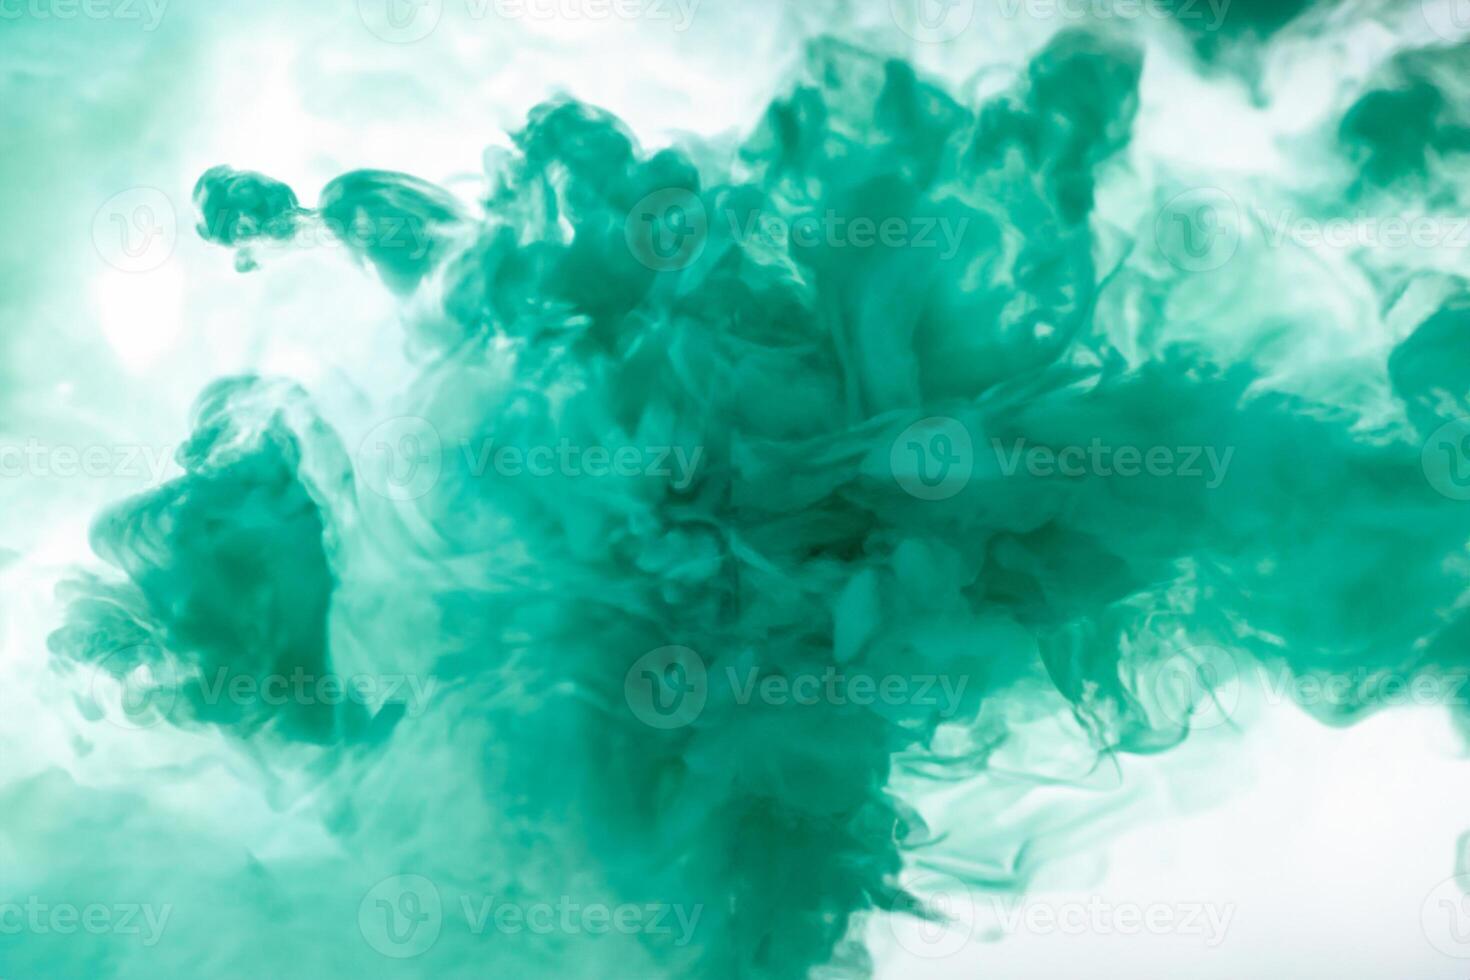 Green smoke bomb exploding against white background photo